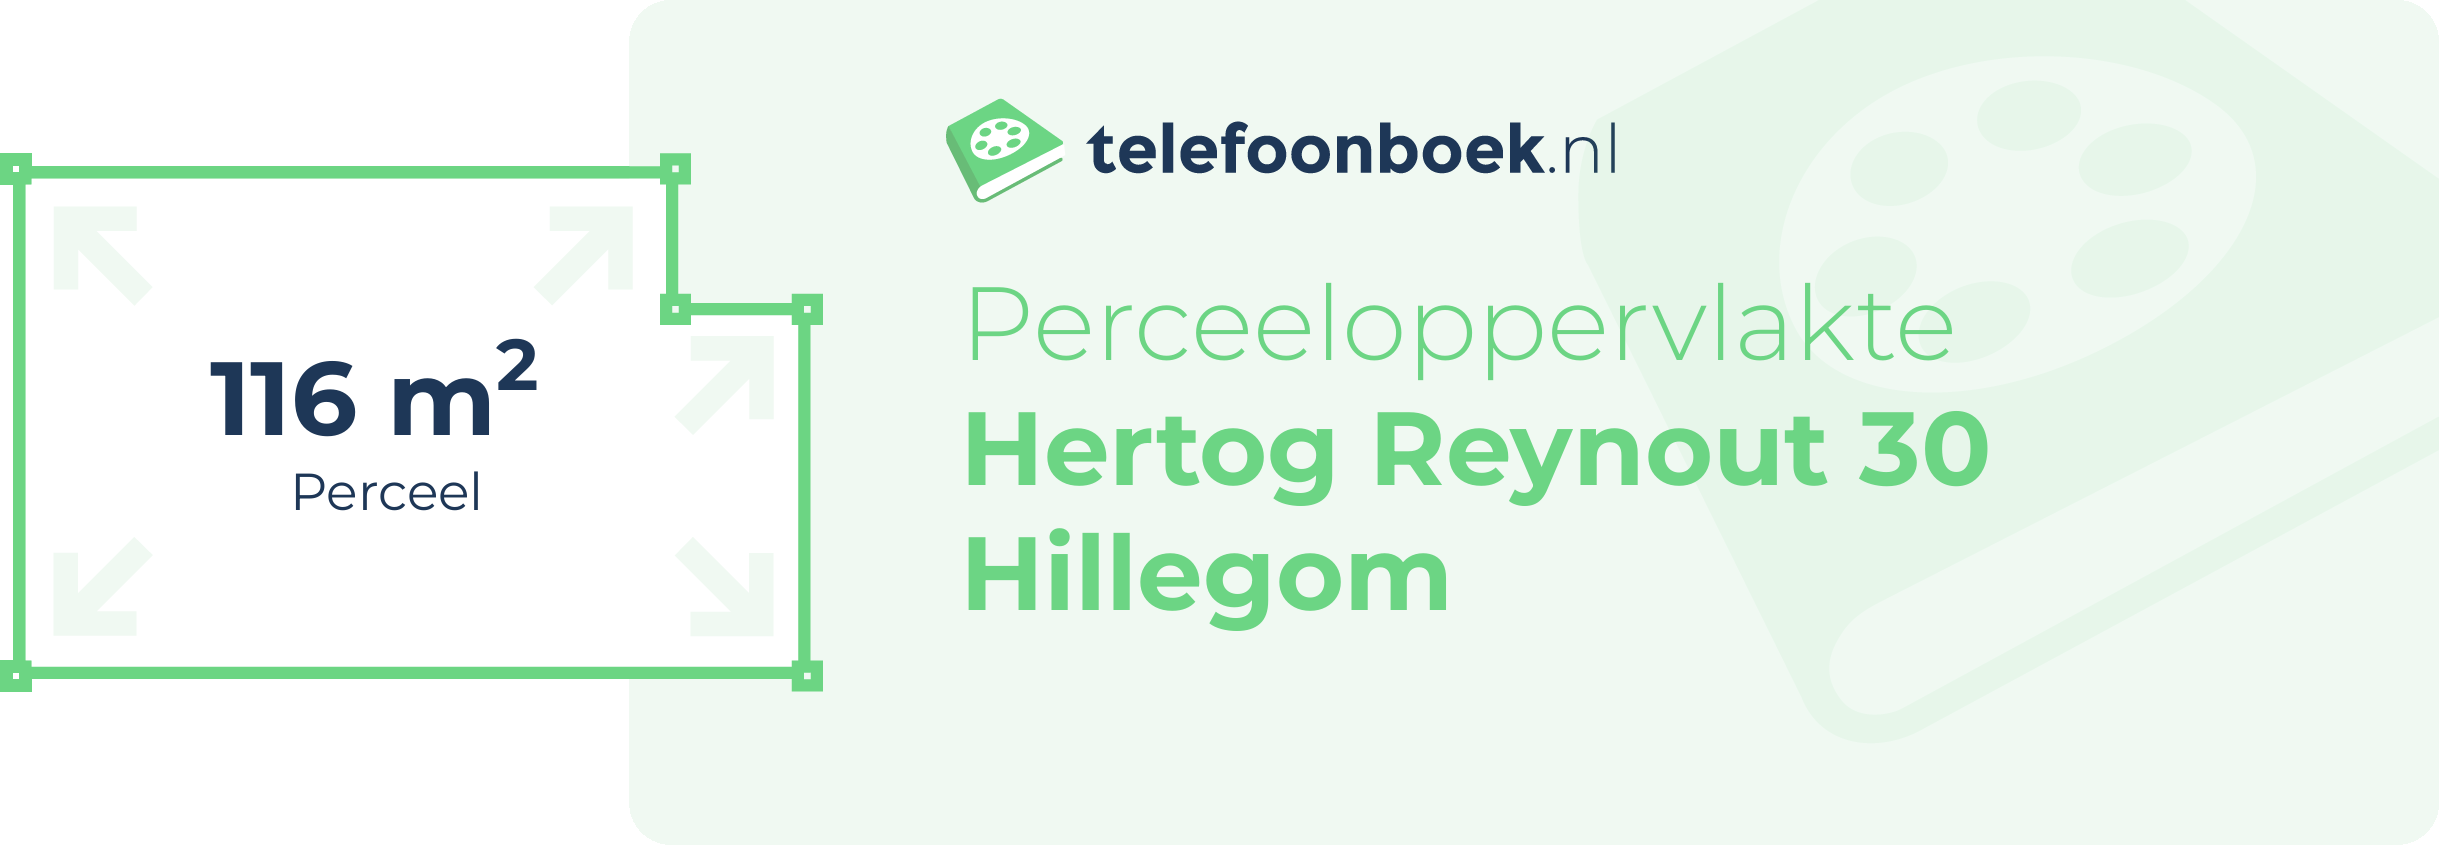 Perceeloppervlakte Hertog Reynout 30 Hillegom